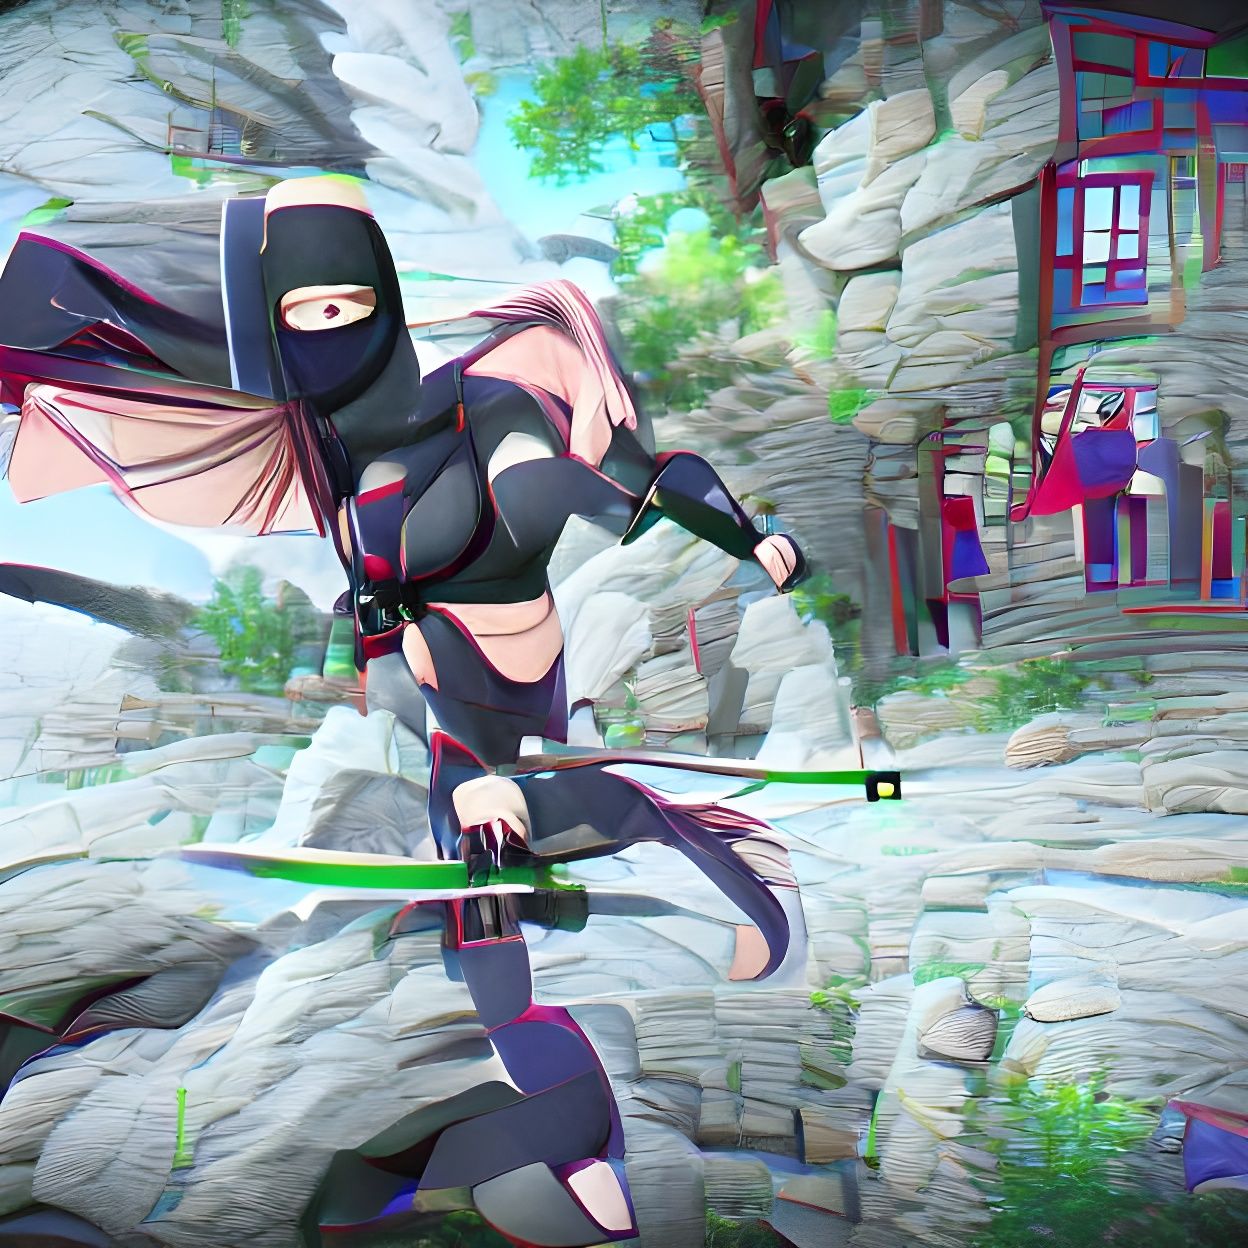 Anime ninja zrt - Anime ninja zrt updated their cover photo.